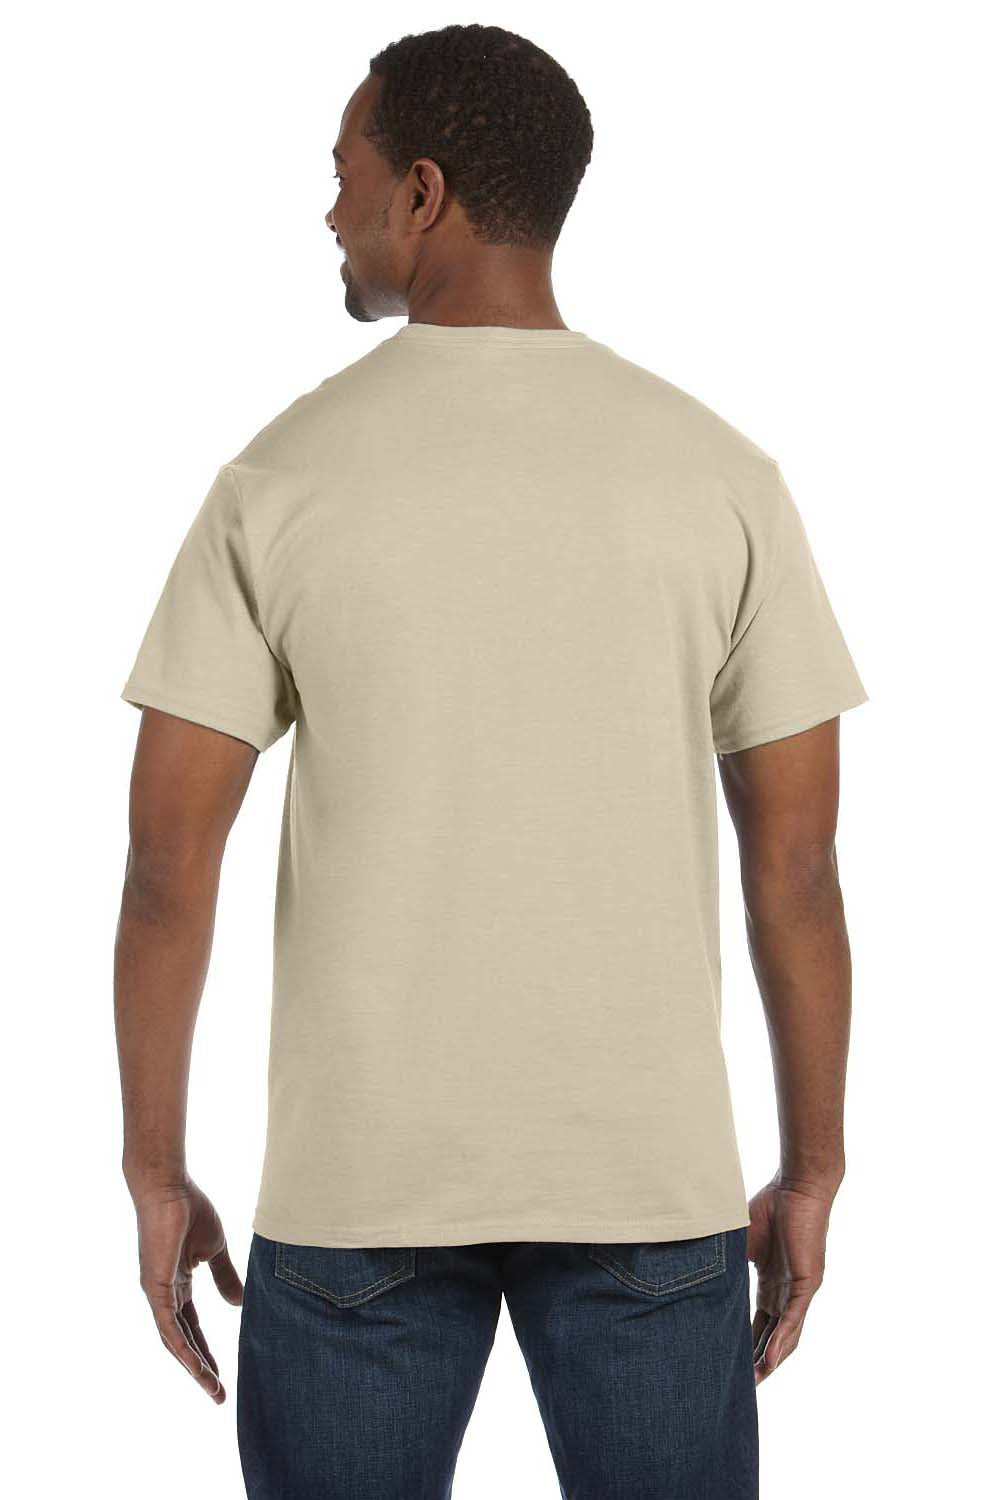 Hanes 5250T Mens ComfortSoft Short Sleeve Crewneck T-Shirt Sand Brown Back